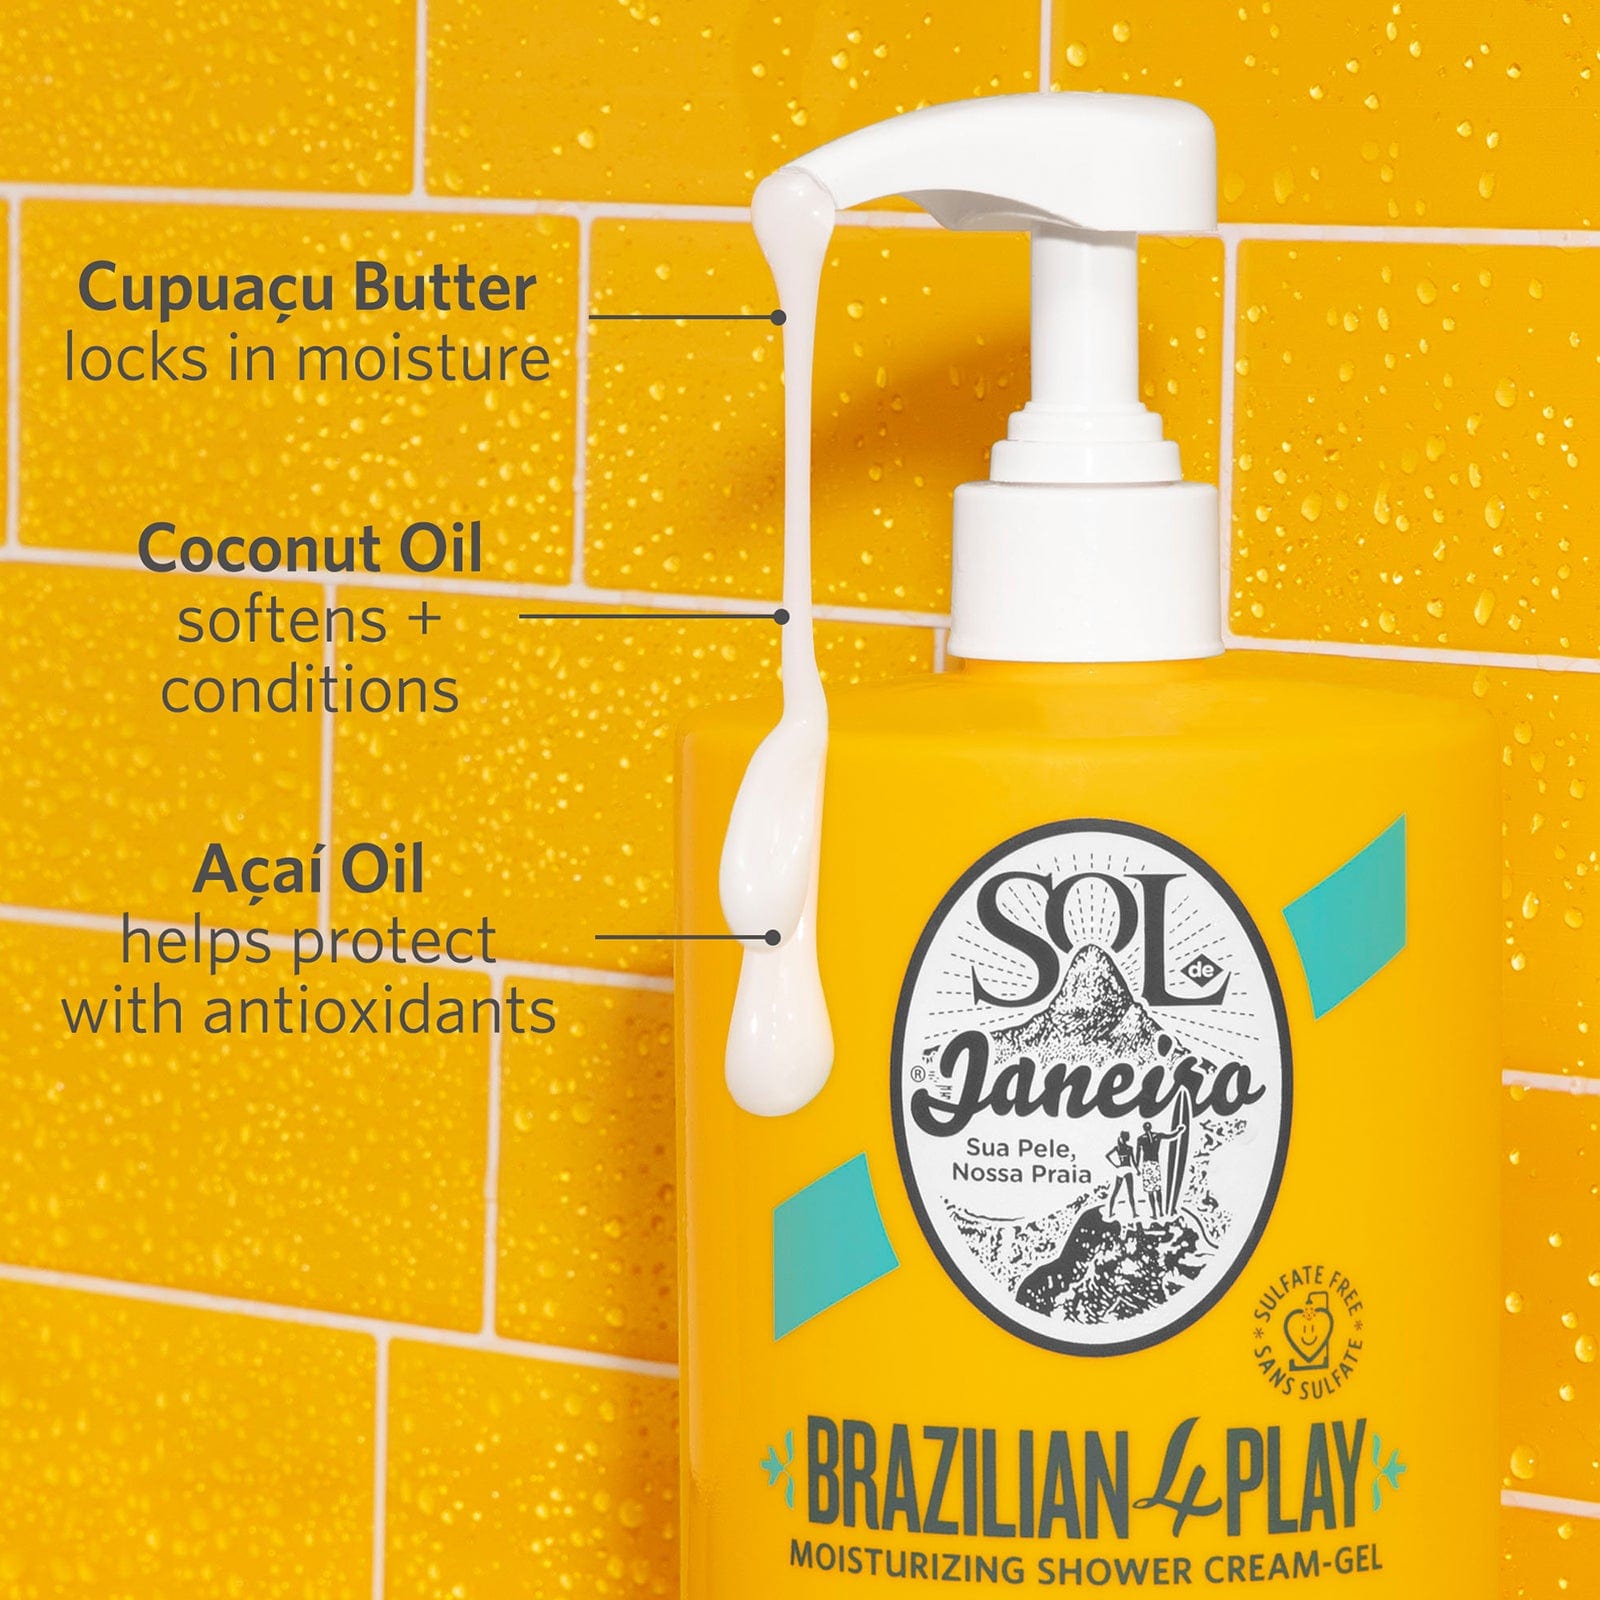 Sol de Janeiro Brazilian 4 Play Moisturizing Shower Cream-Gel 1 L